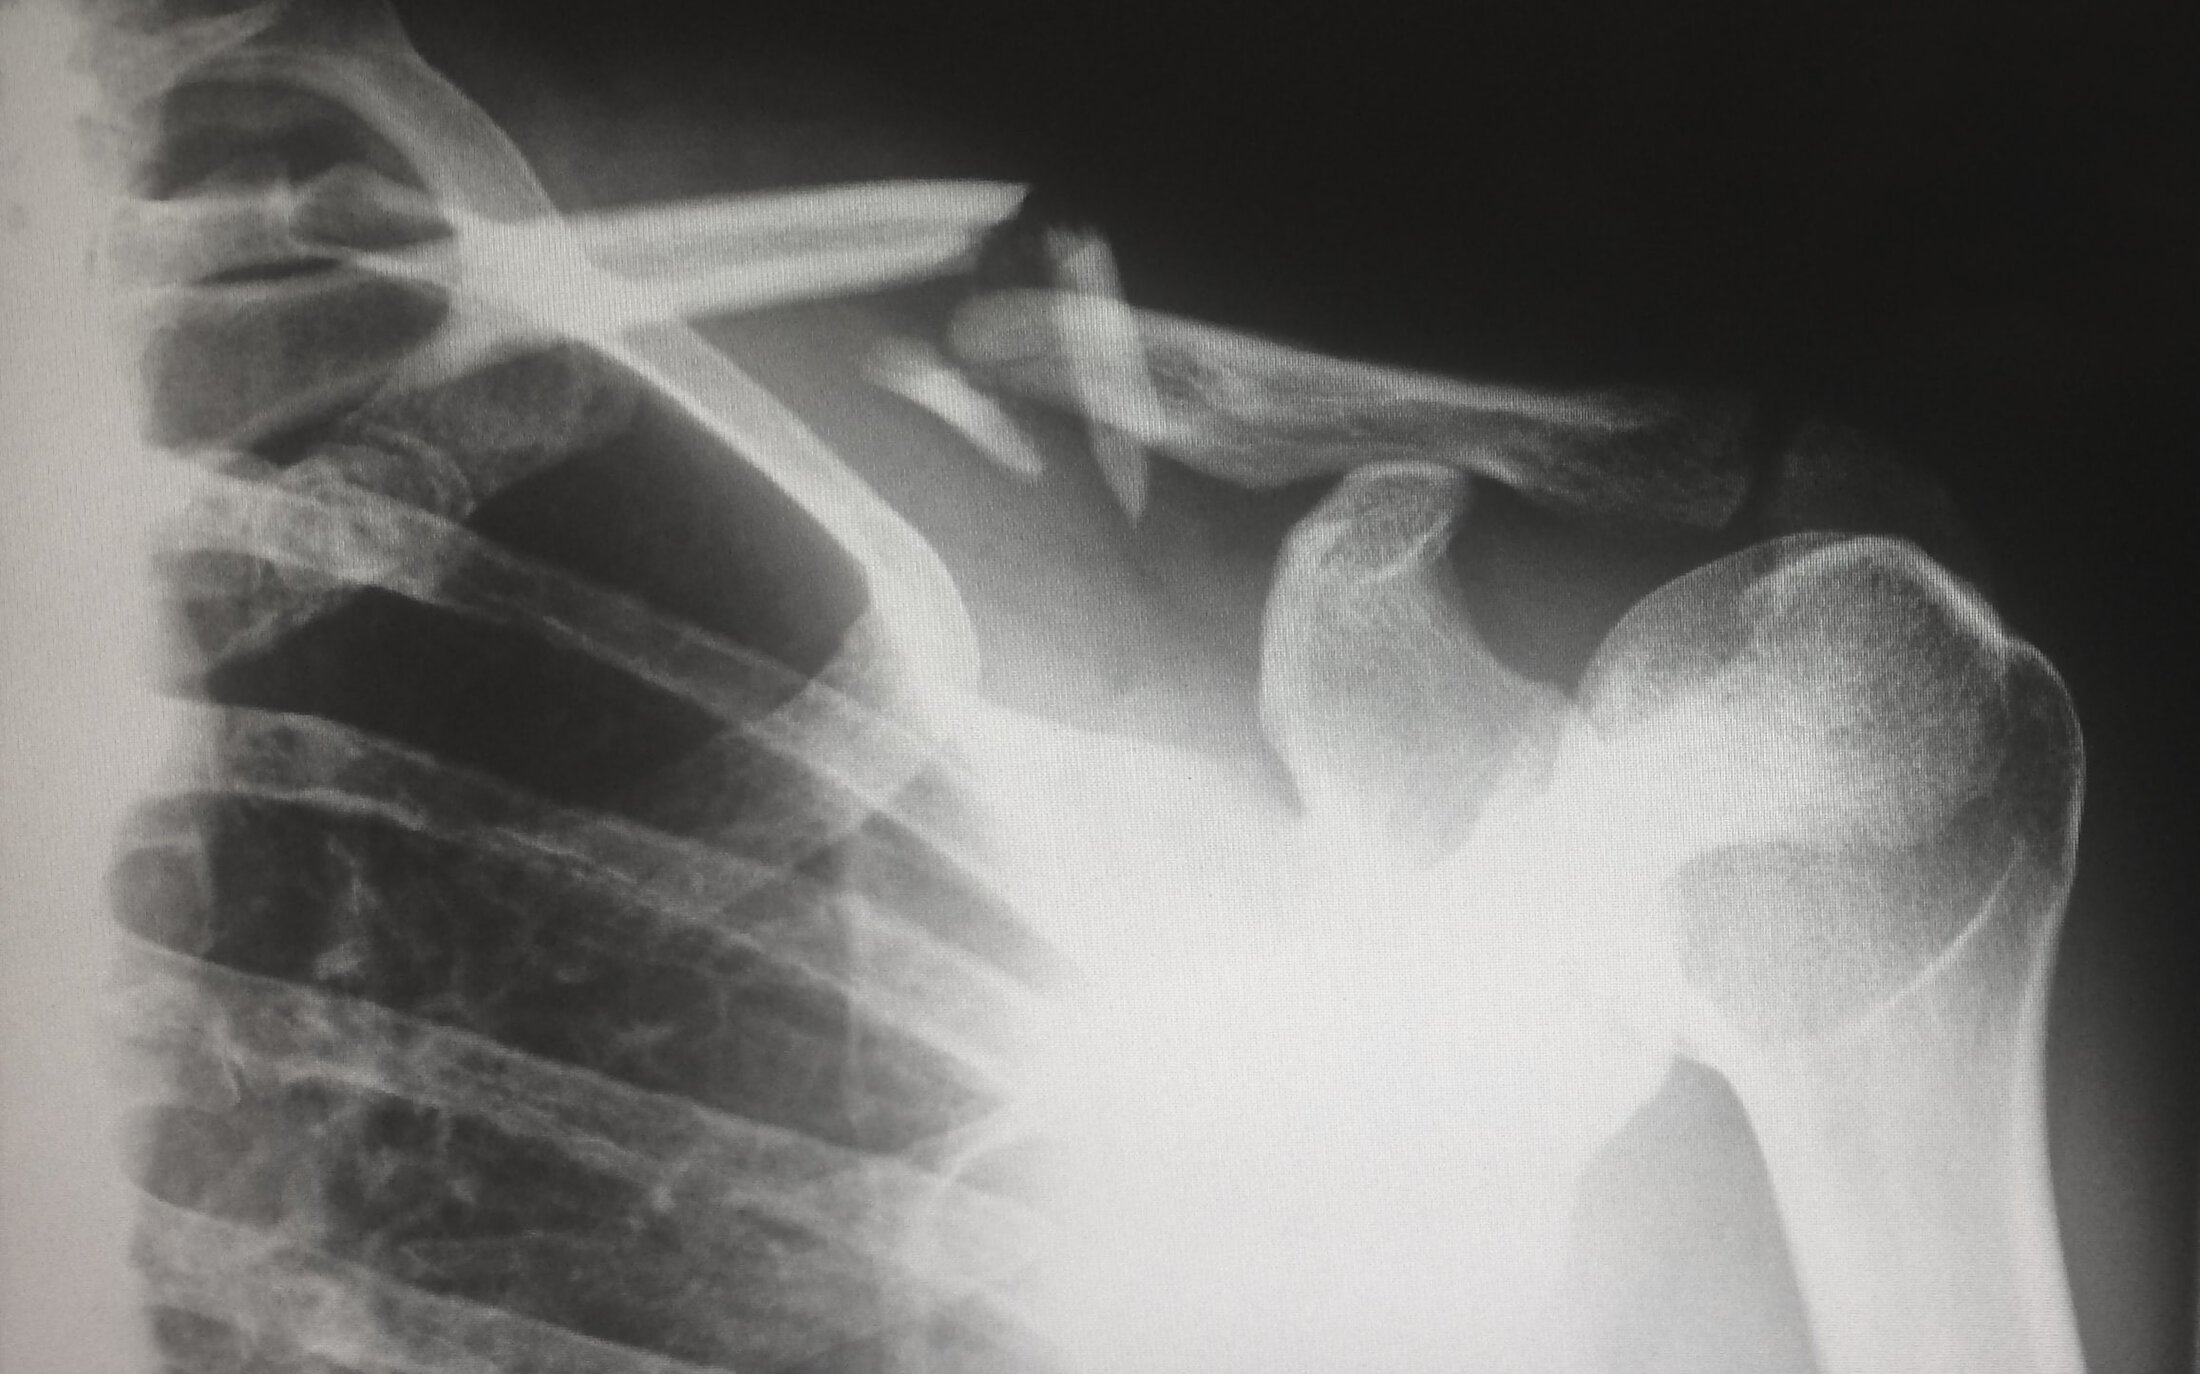 x ray showing broken collar bone